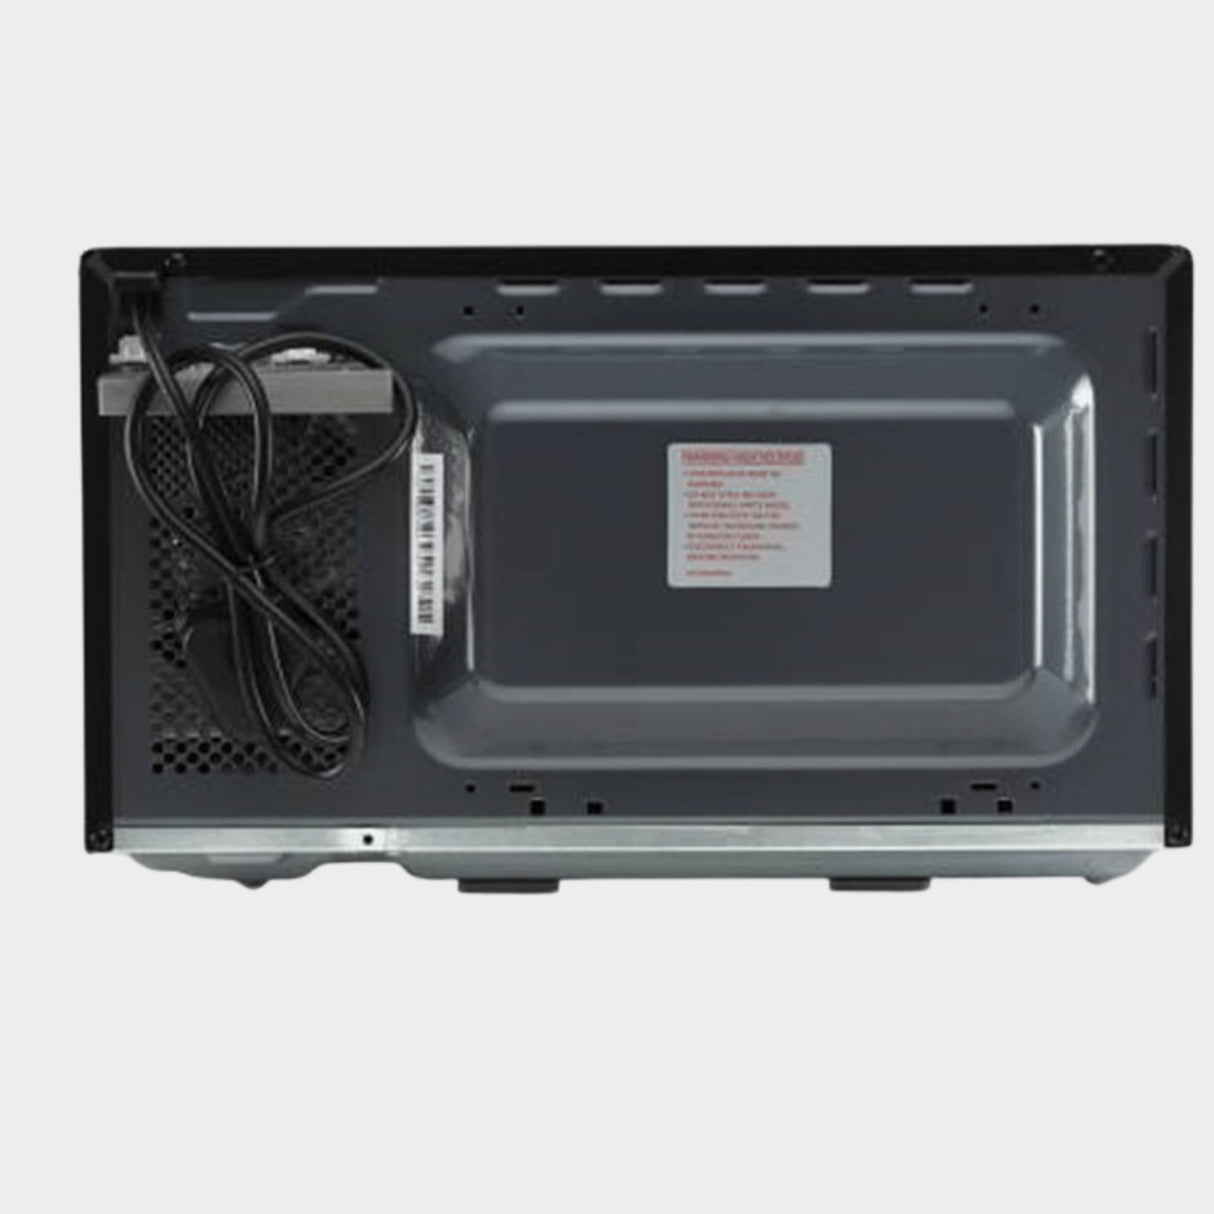 Panasonic 20L Solo Microwave Oven NN-ST266BFDG - Black - KWT Tech Mart